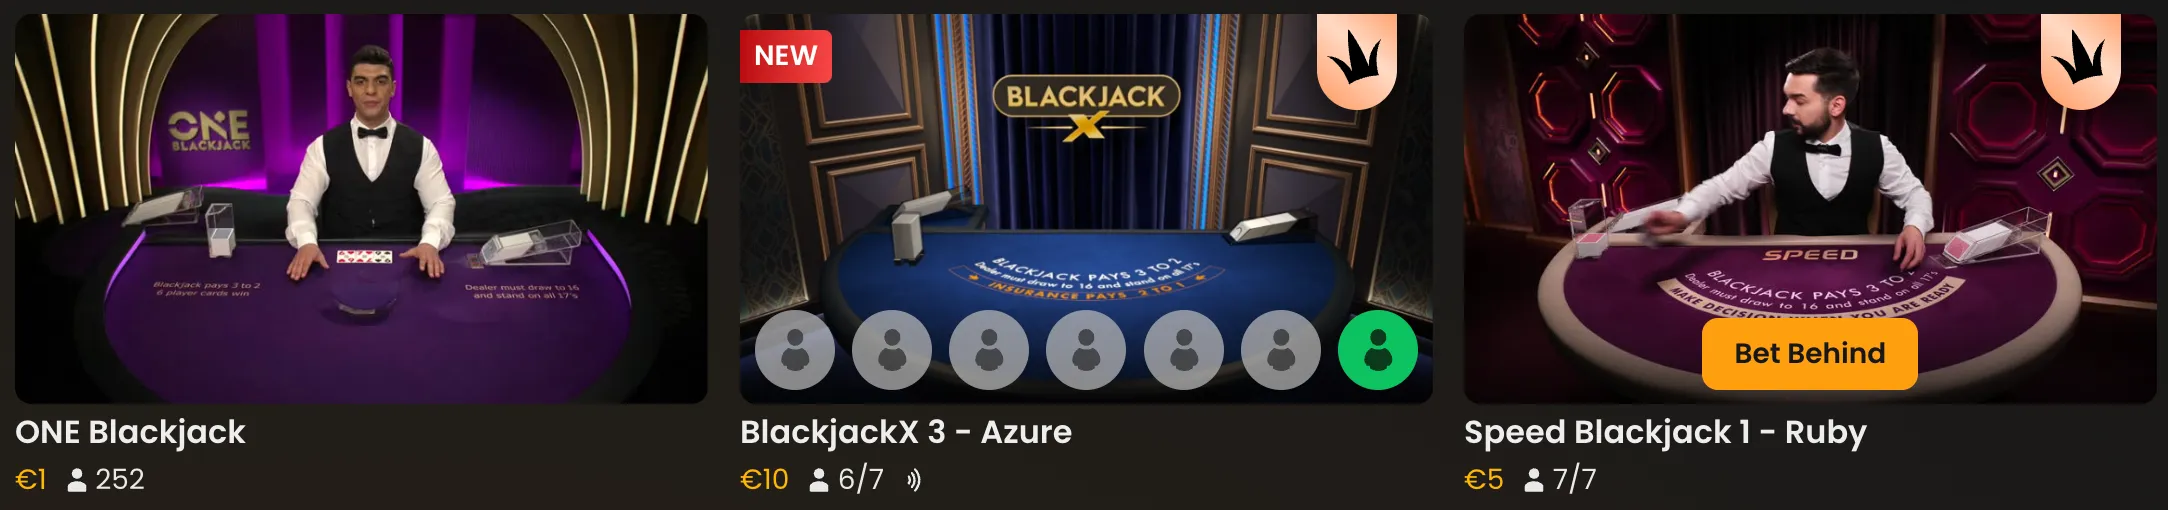 Need for Spin Live Blackjack